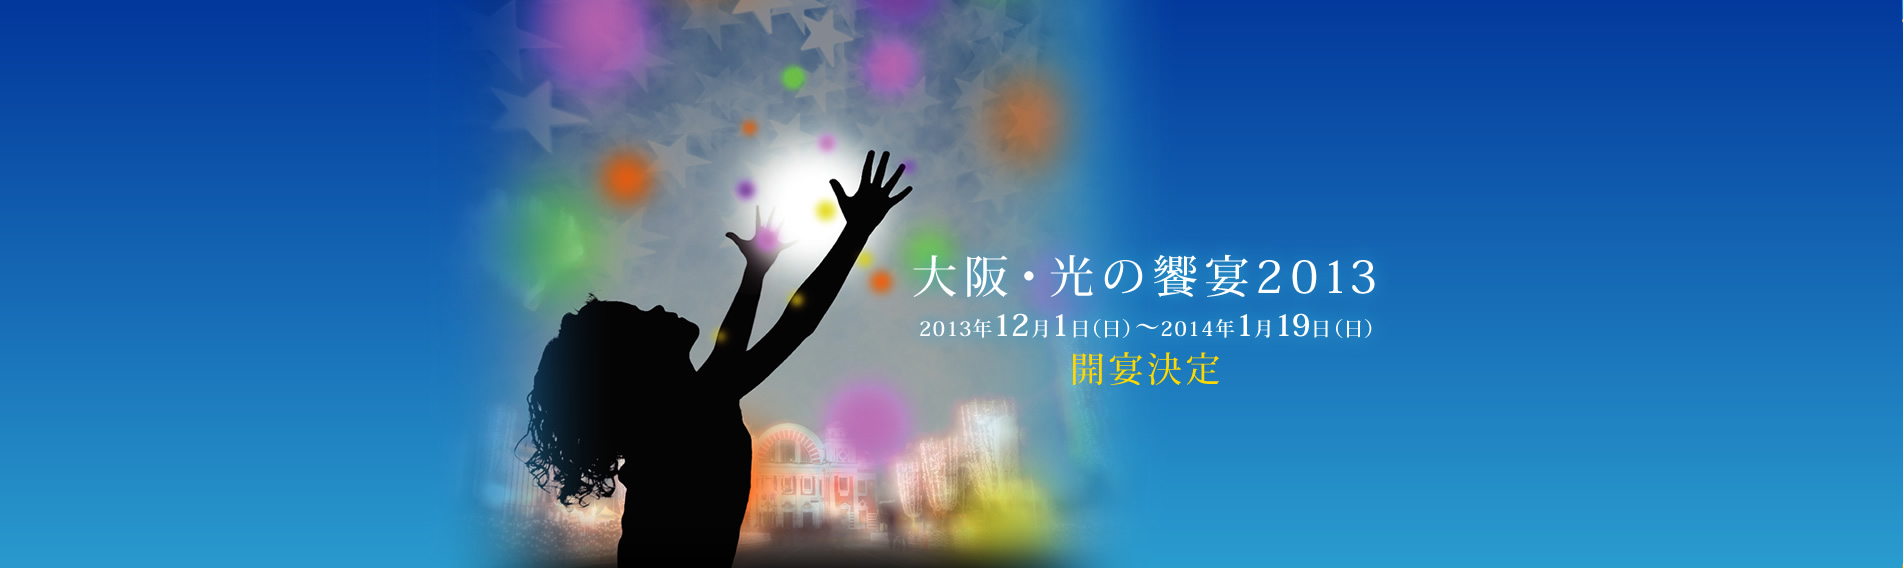 大阪光の饗宴2013